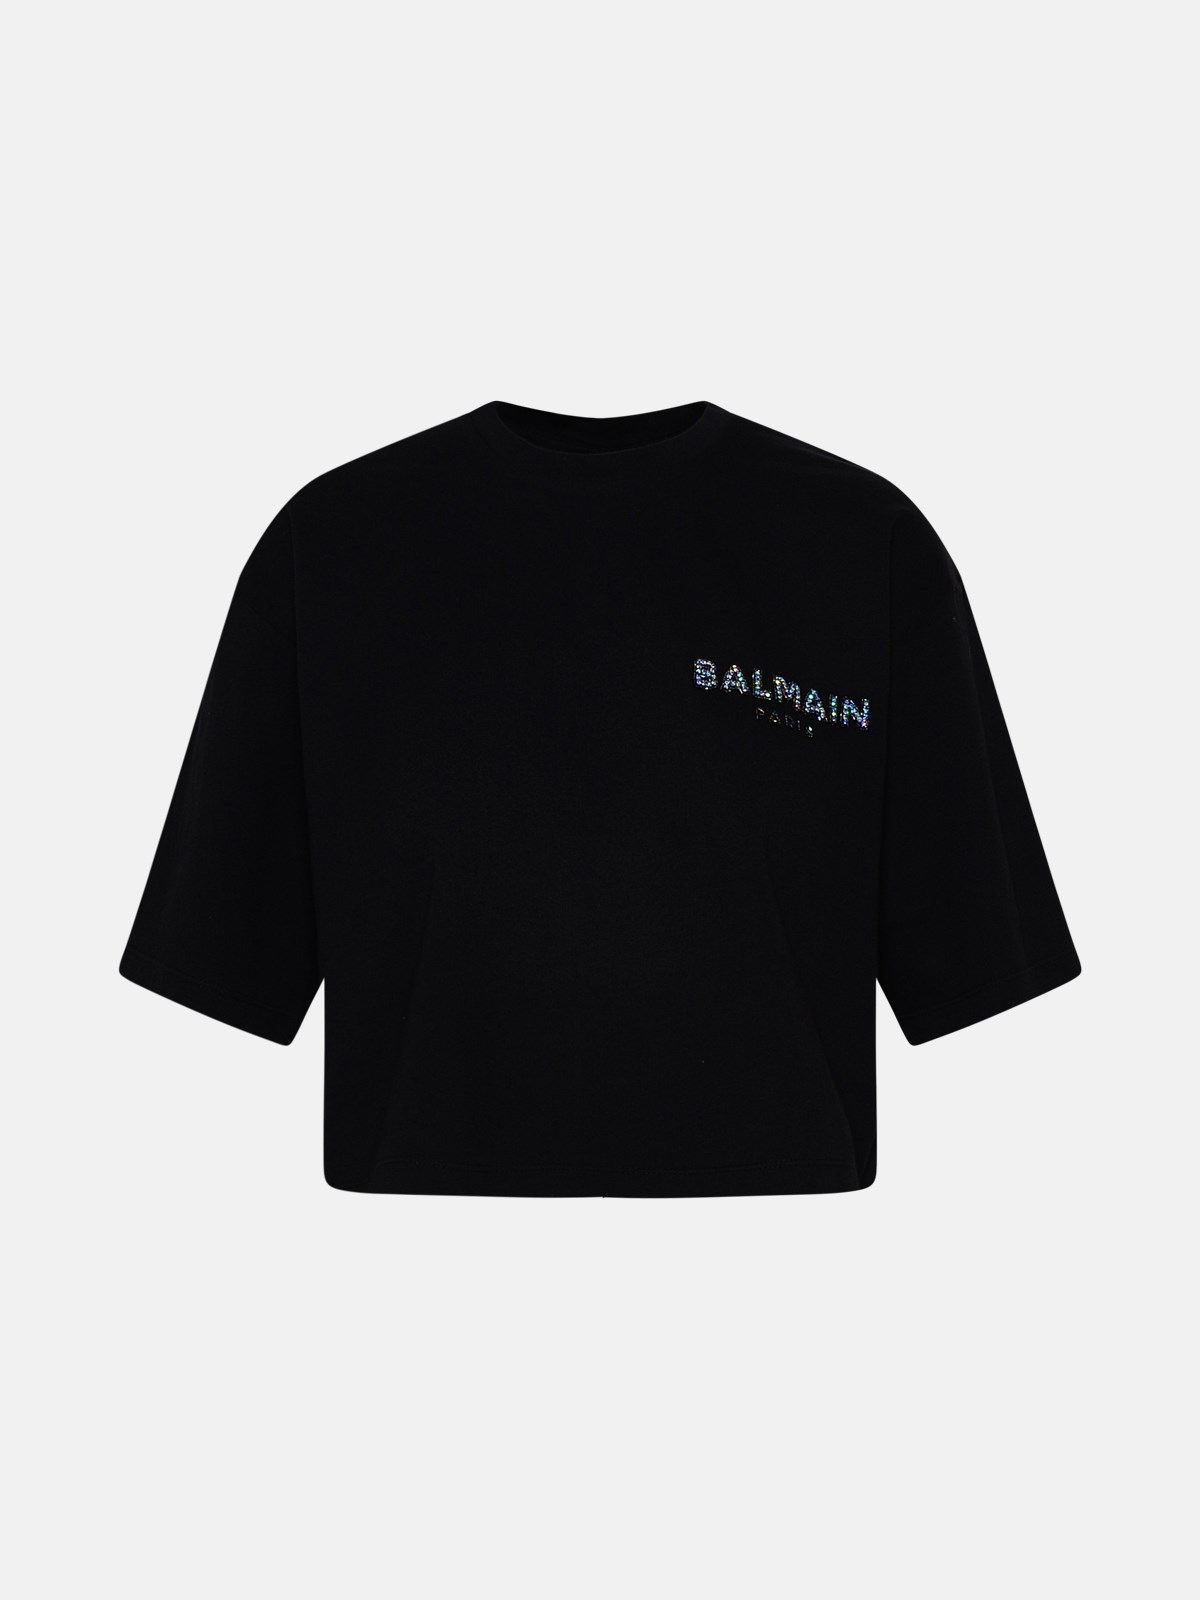 Womens Balenciaga Tshirt Large Fit in Black  Balenciaga US